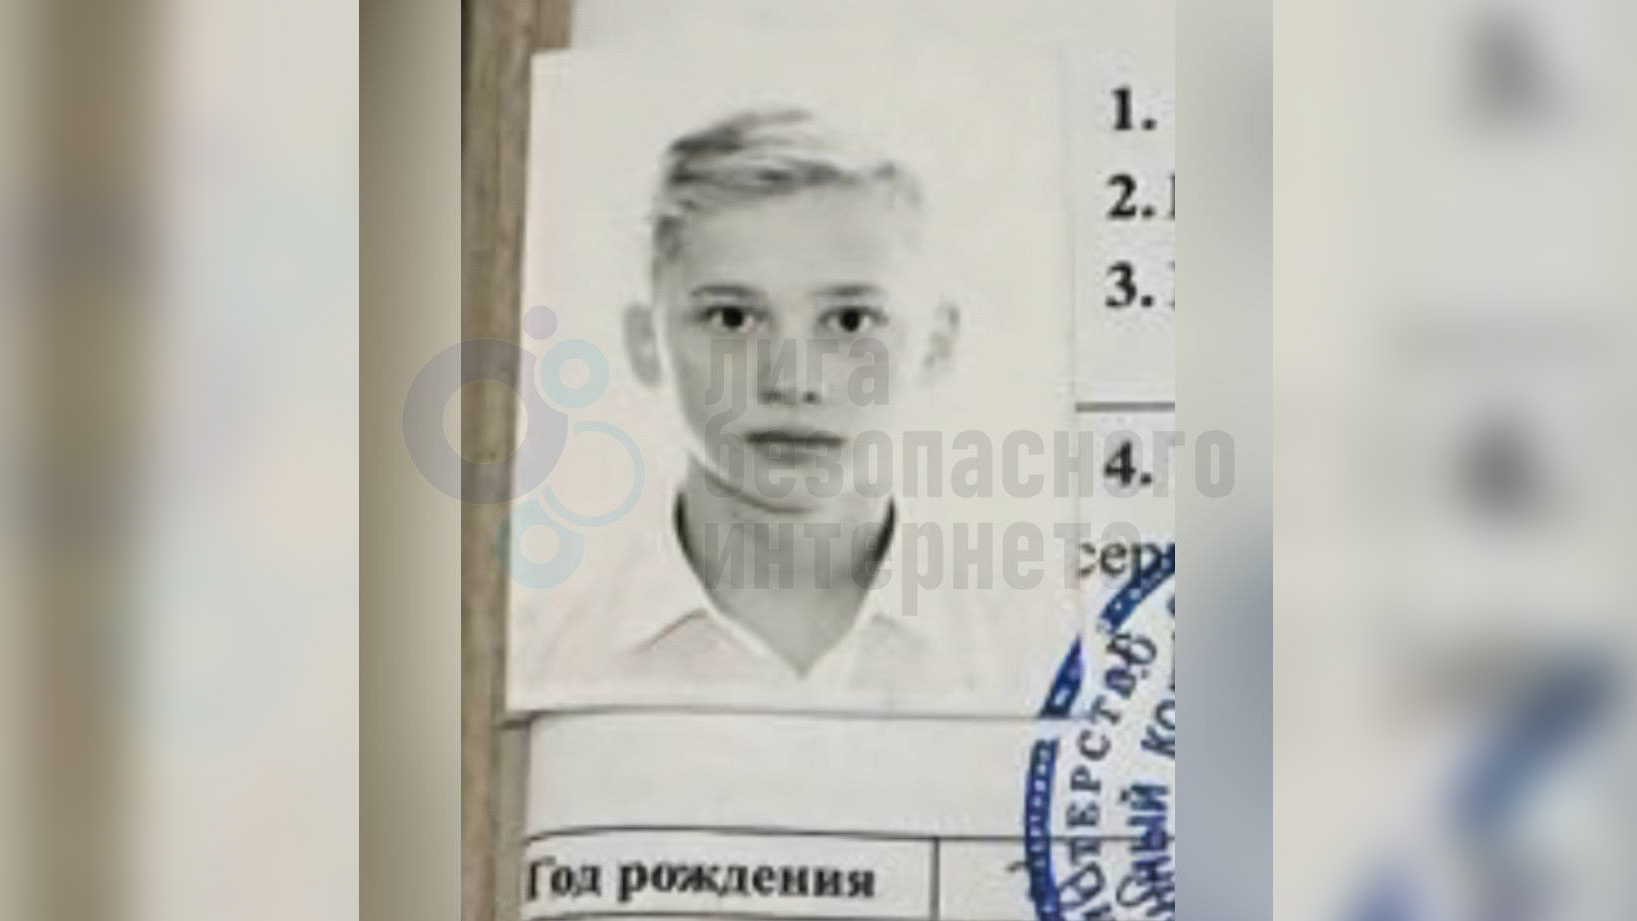 Екатерина Мизулина опубликовала фото Милохина из его личного дела. Фото © t.me / Екатерина Мизулина